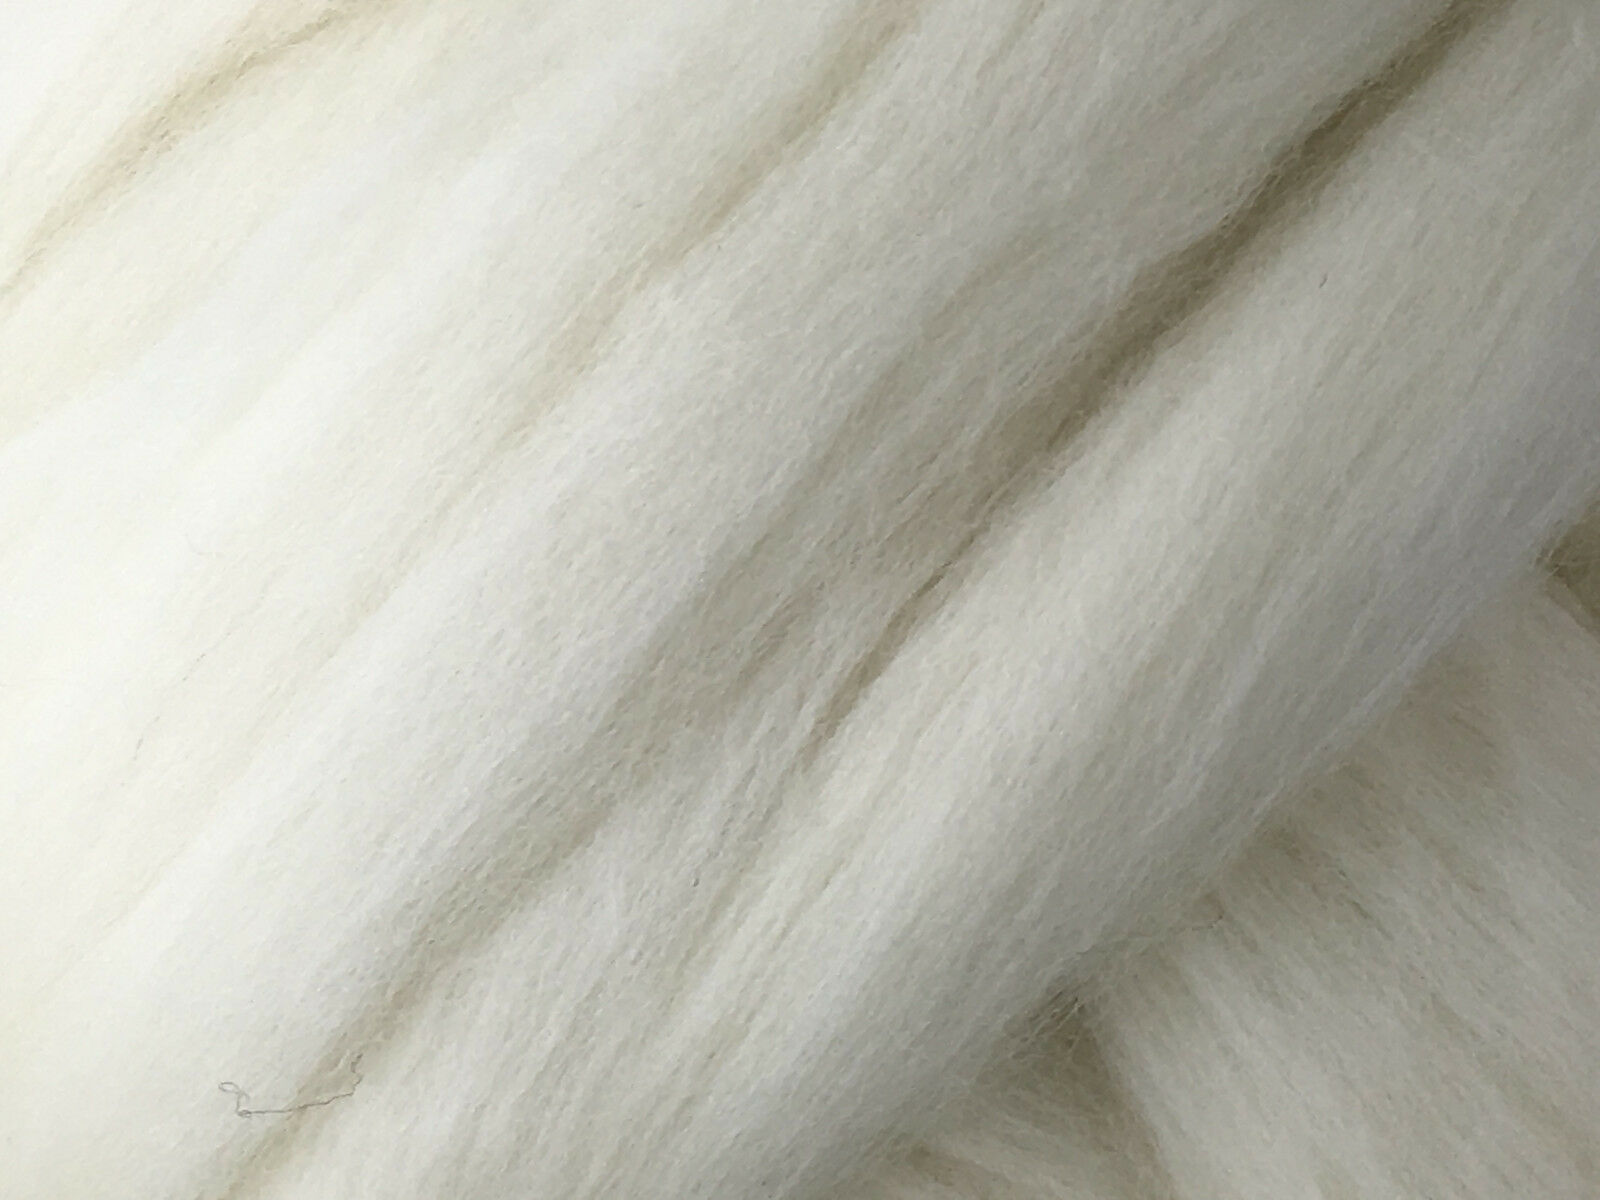 Wool Roving 1lb, Roving, Wool Top, Roving Wool, Spin Fiber, Spin Wool, Felt Wool